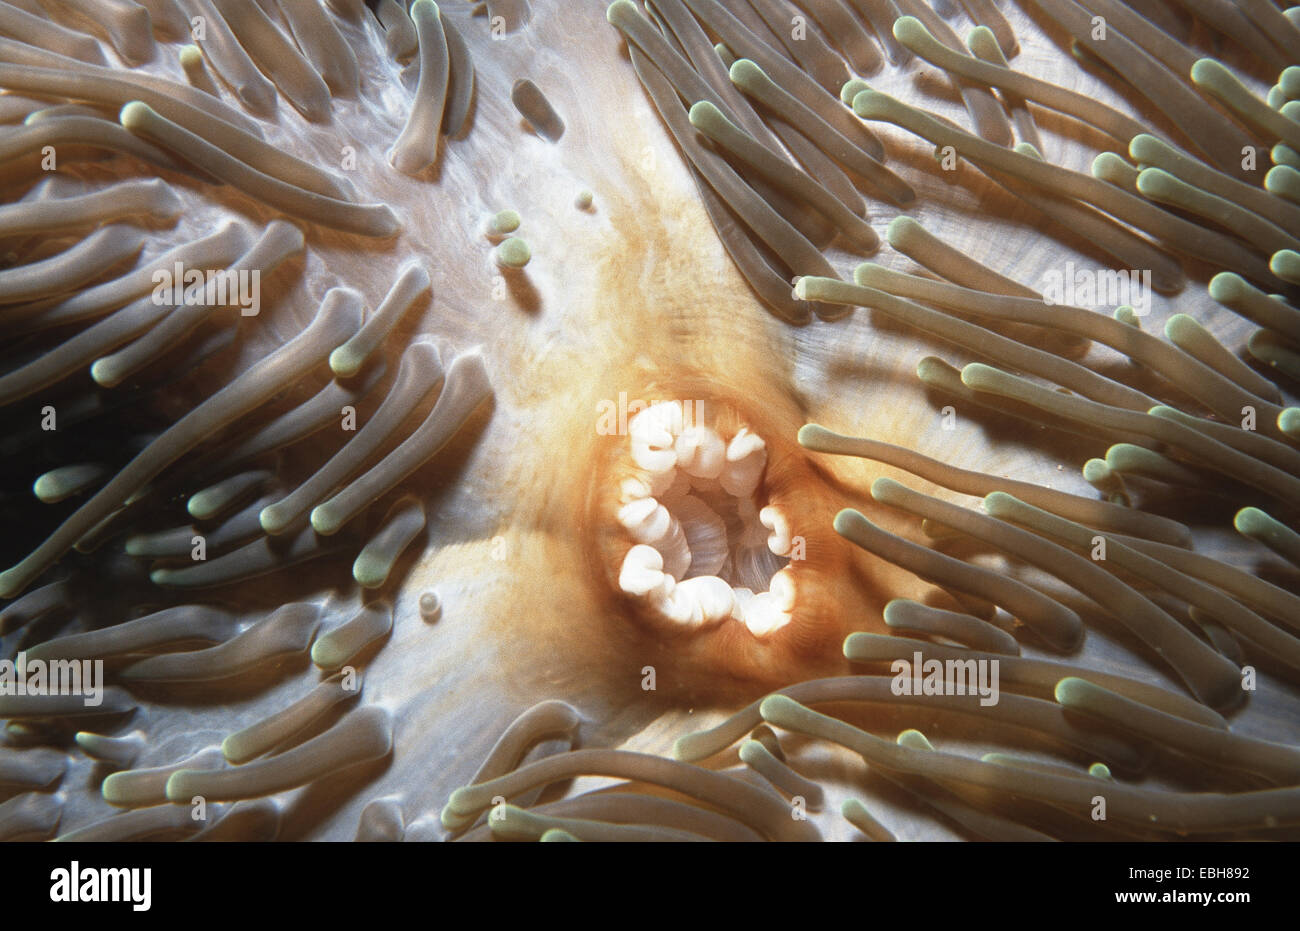 giant carpet anemone, giant anemone (Stichodactyla mertensii). Stock Photo